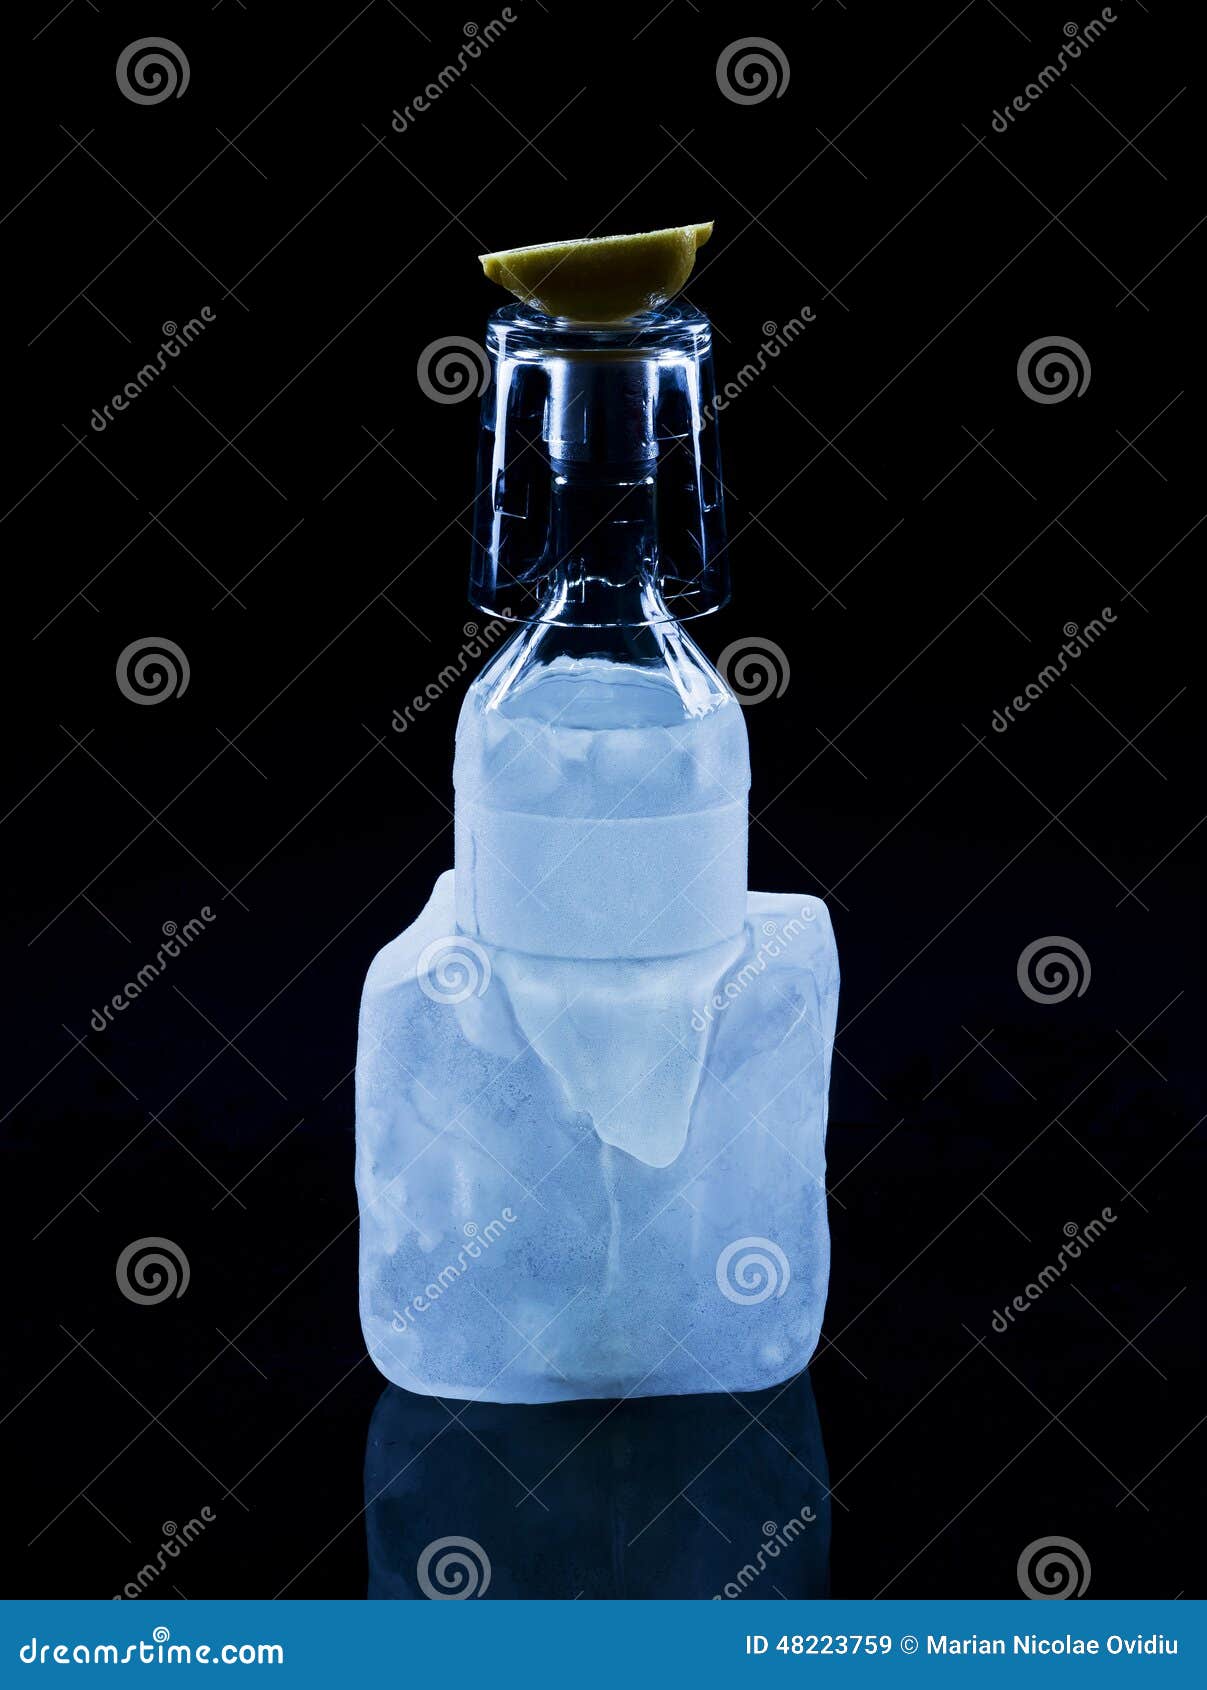 https://thumbs.dreamstime.com/z/bottle-vodka-big-ice-cube-glass-lemon-top-48223759.jpg